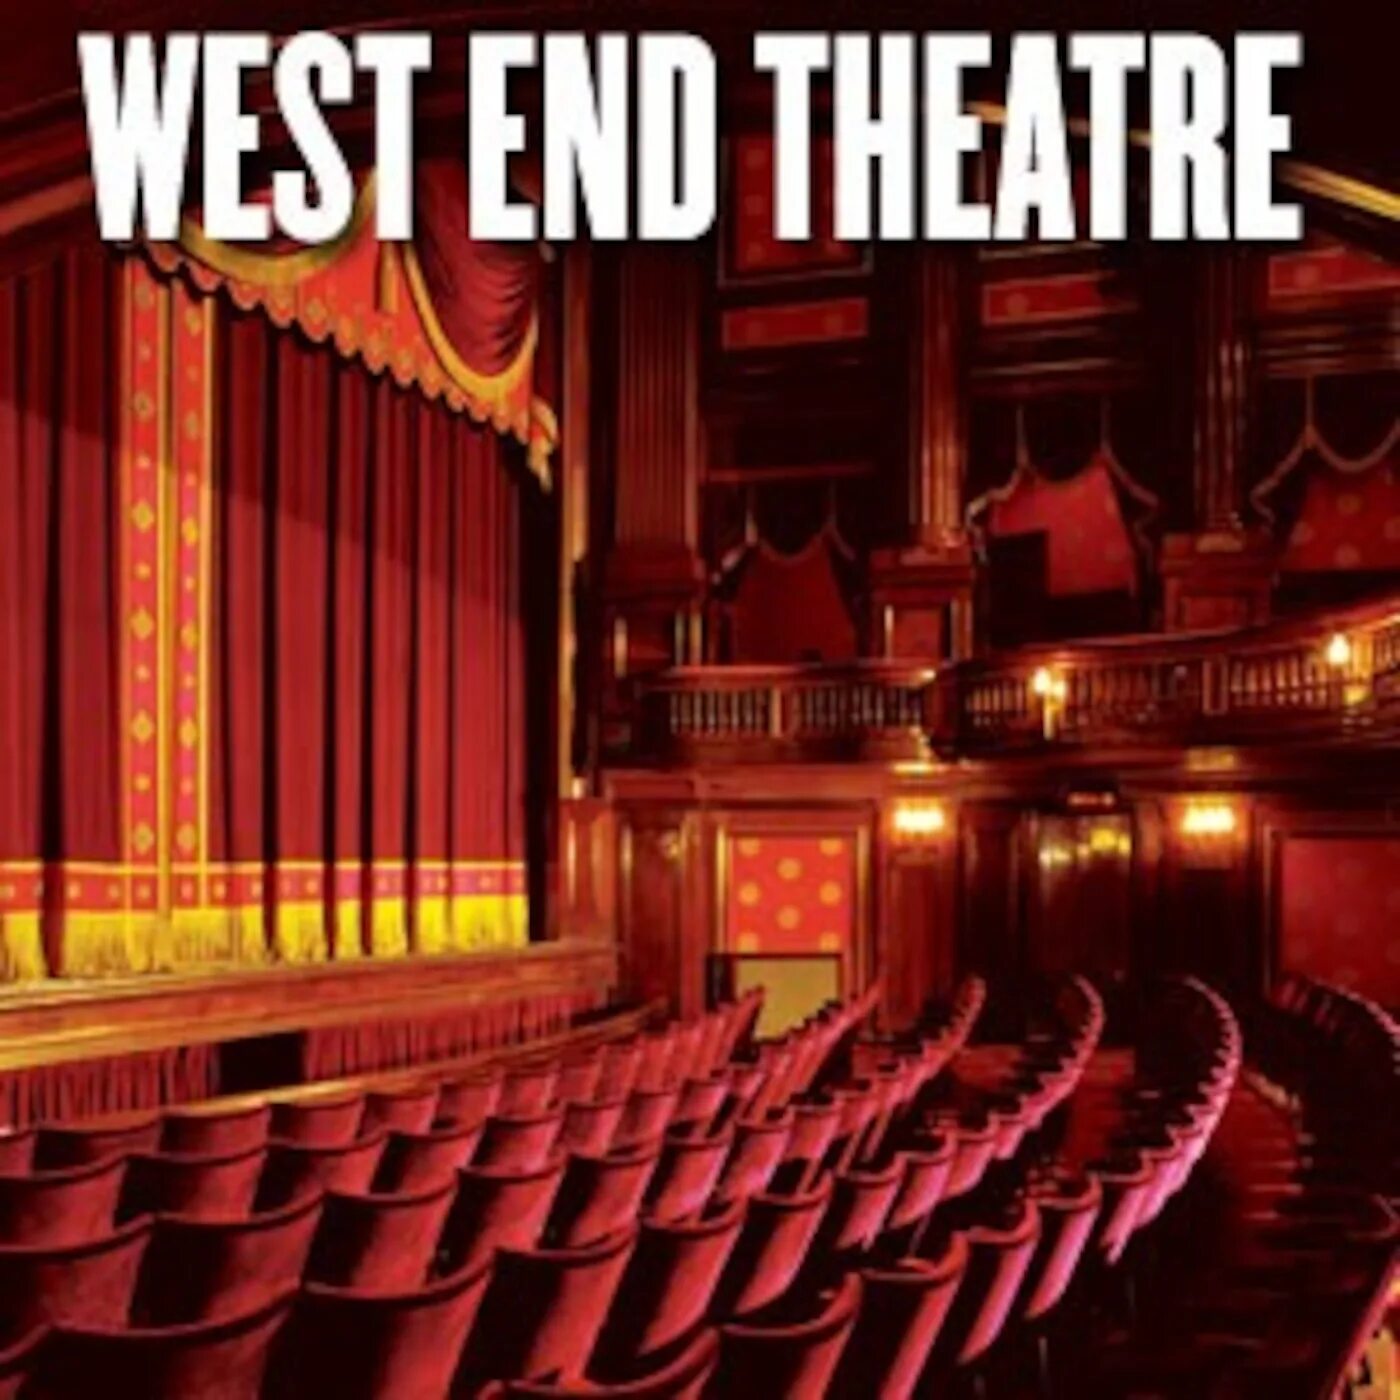 My visit to the theatre. Театр Вест энд Лондон. Театры Вест энда Лондон. 2.5 Театр "Вест-энд" (West end Theatre). Shaftesbury Theatre.